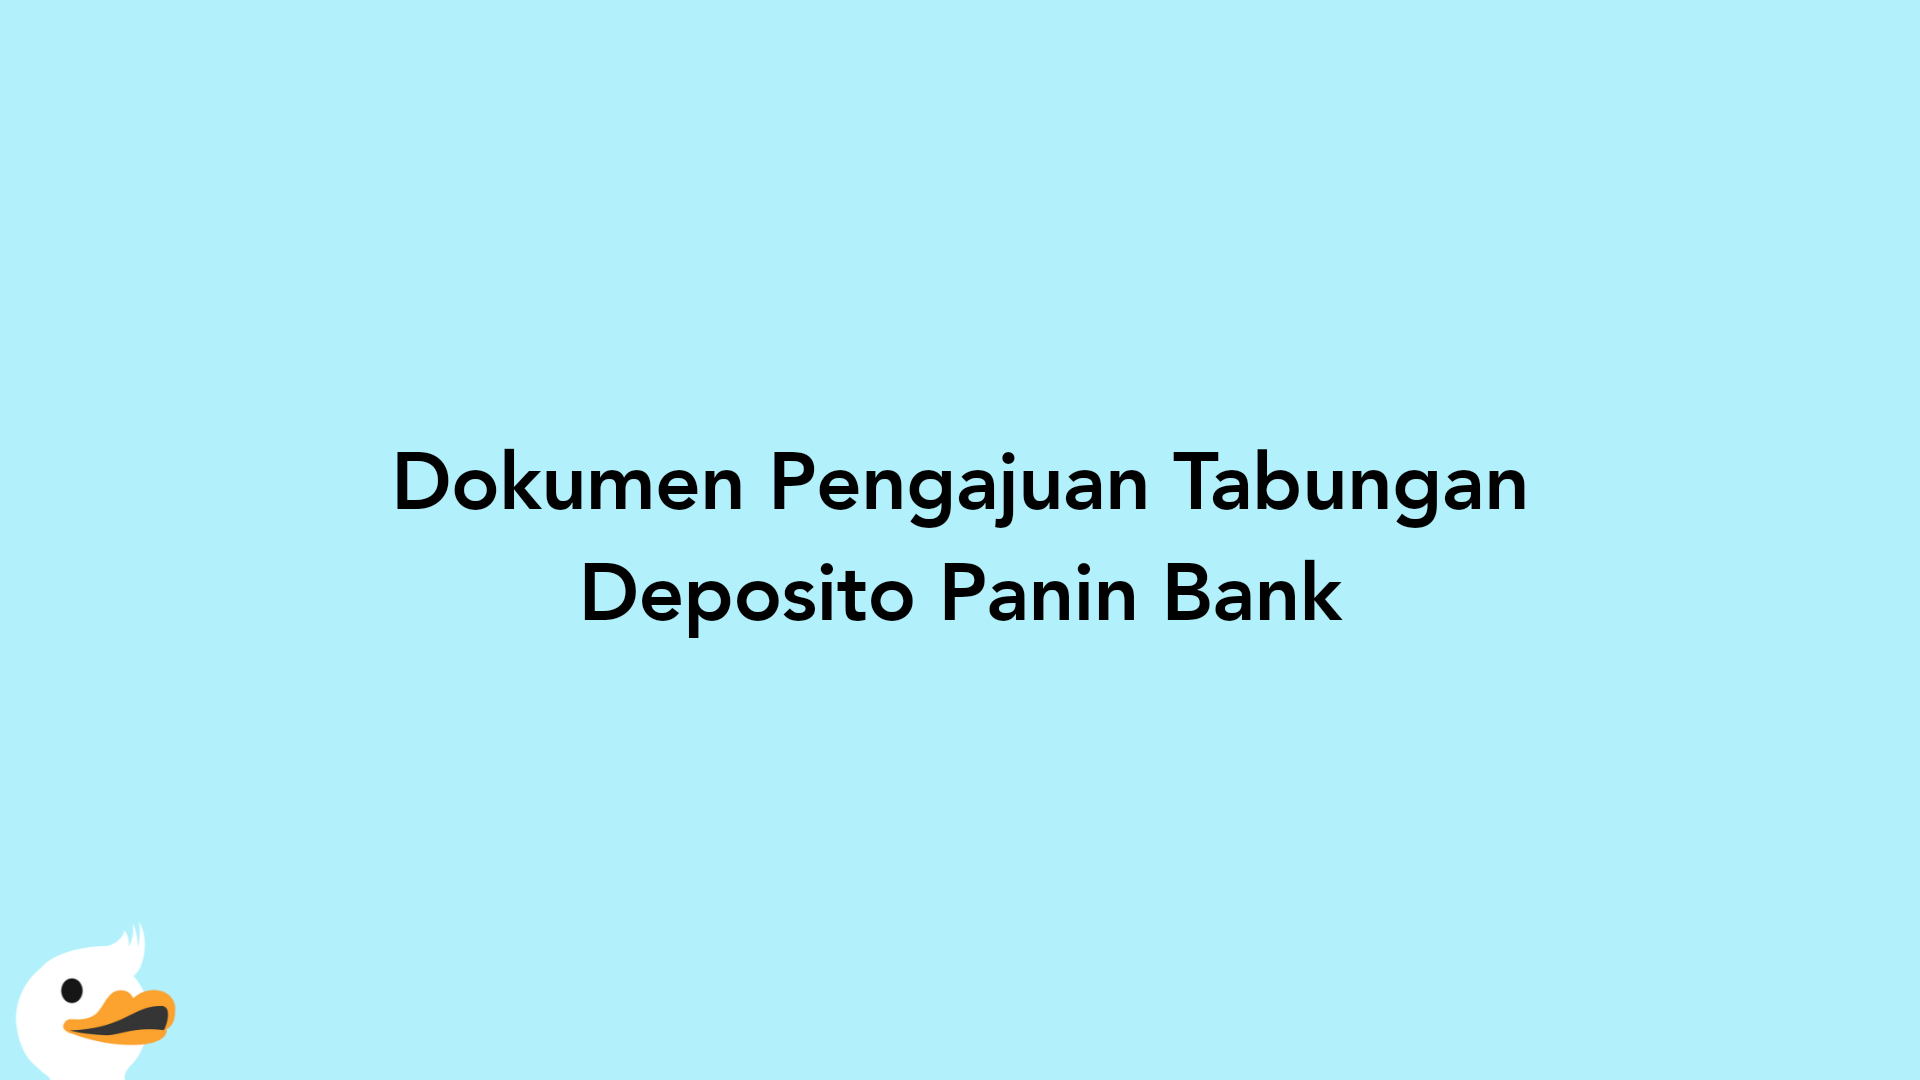 Dokumen Pengajuan Tabungan Deposito Panin Bank